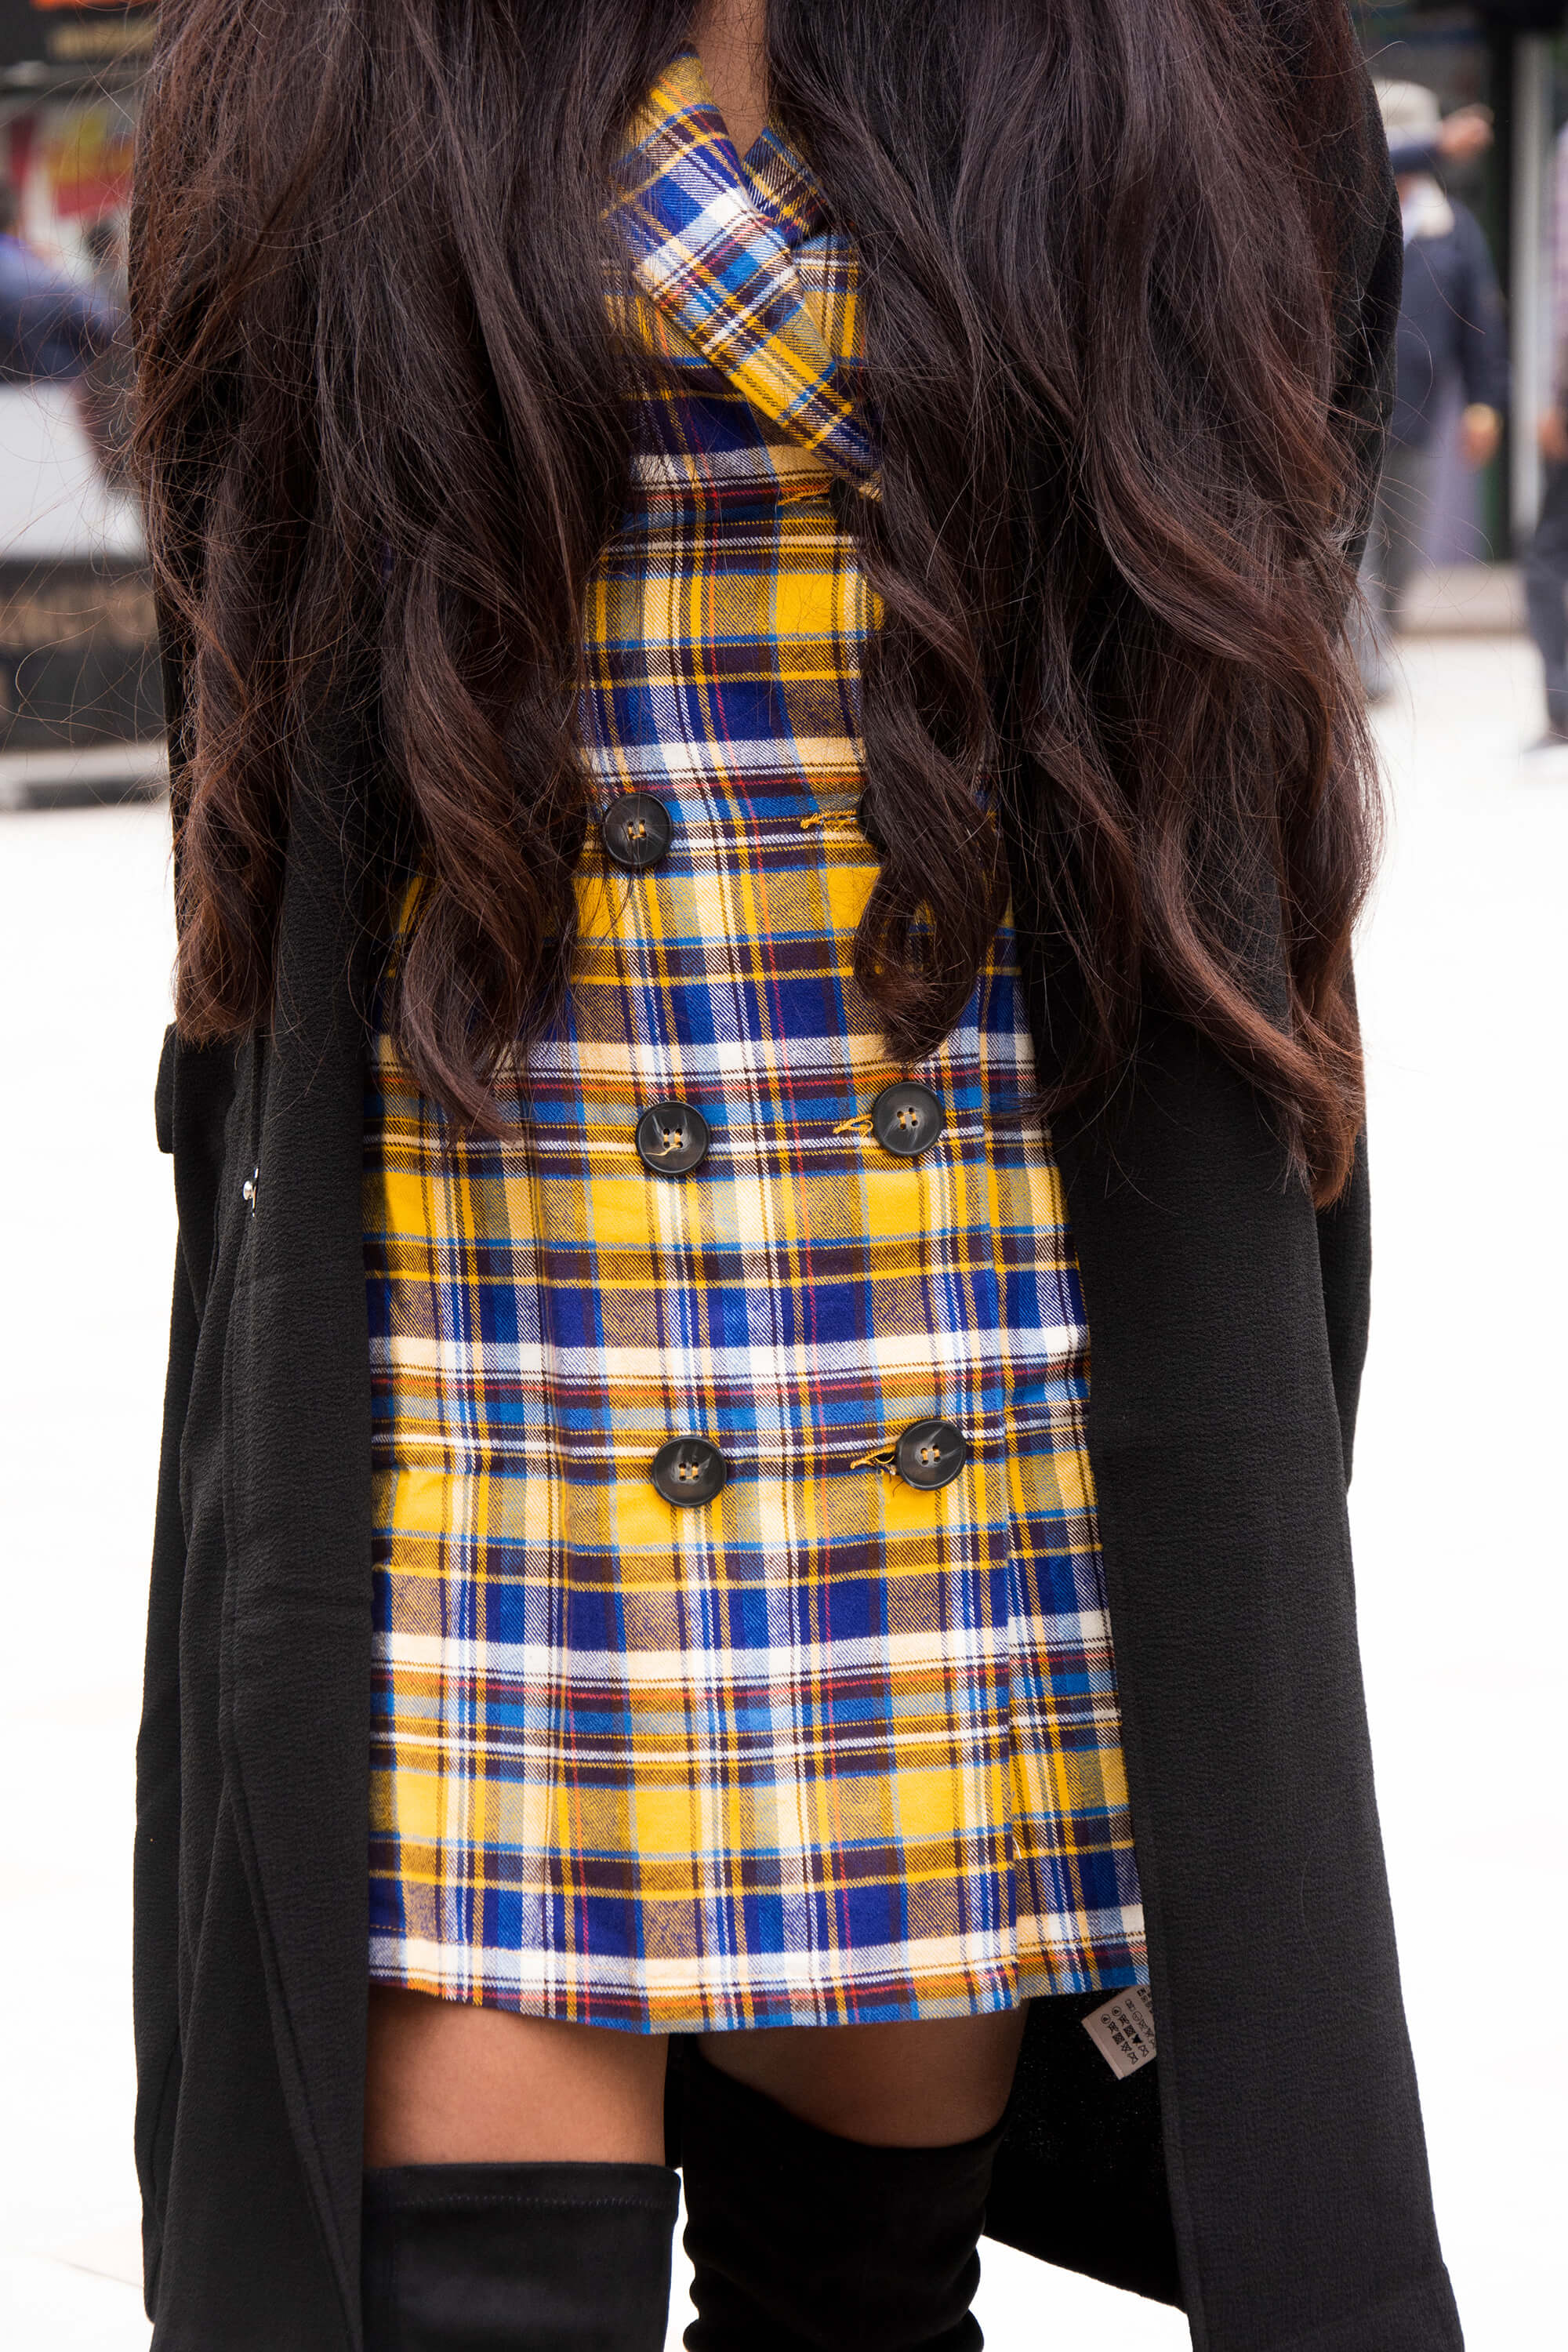 plaid dress : winter style